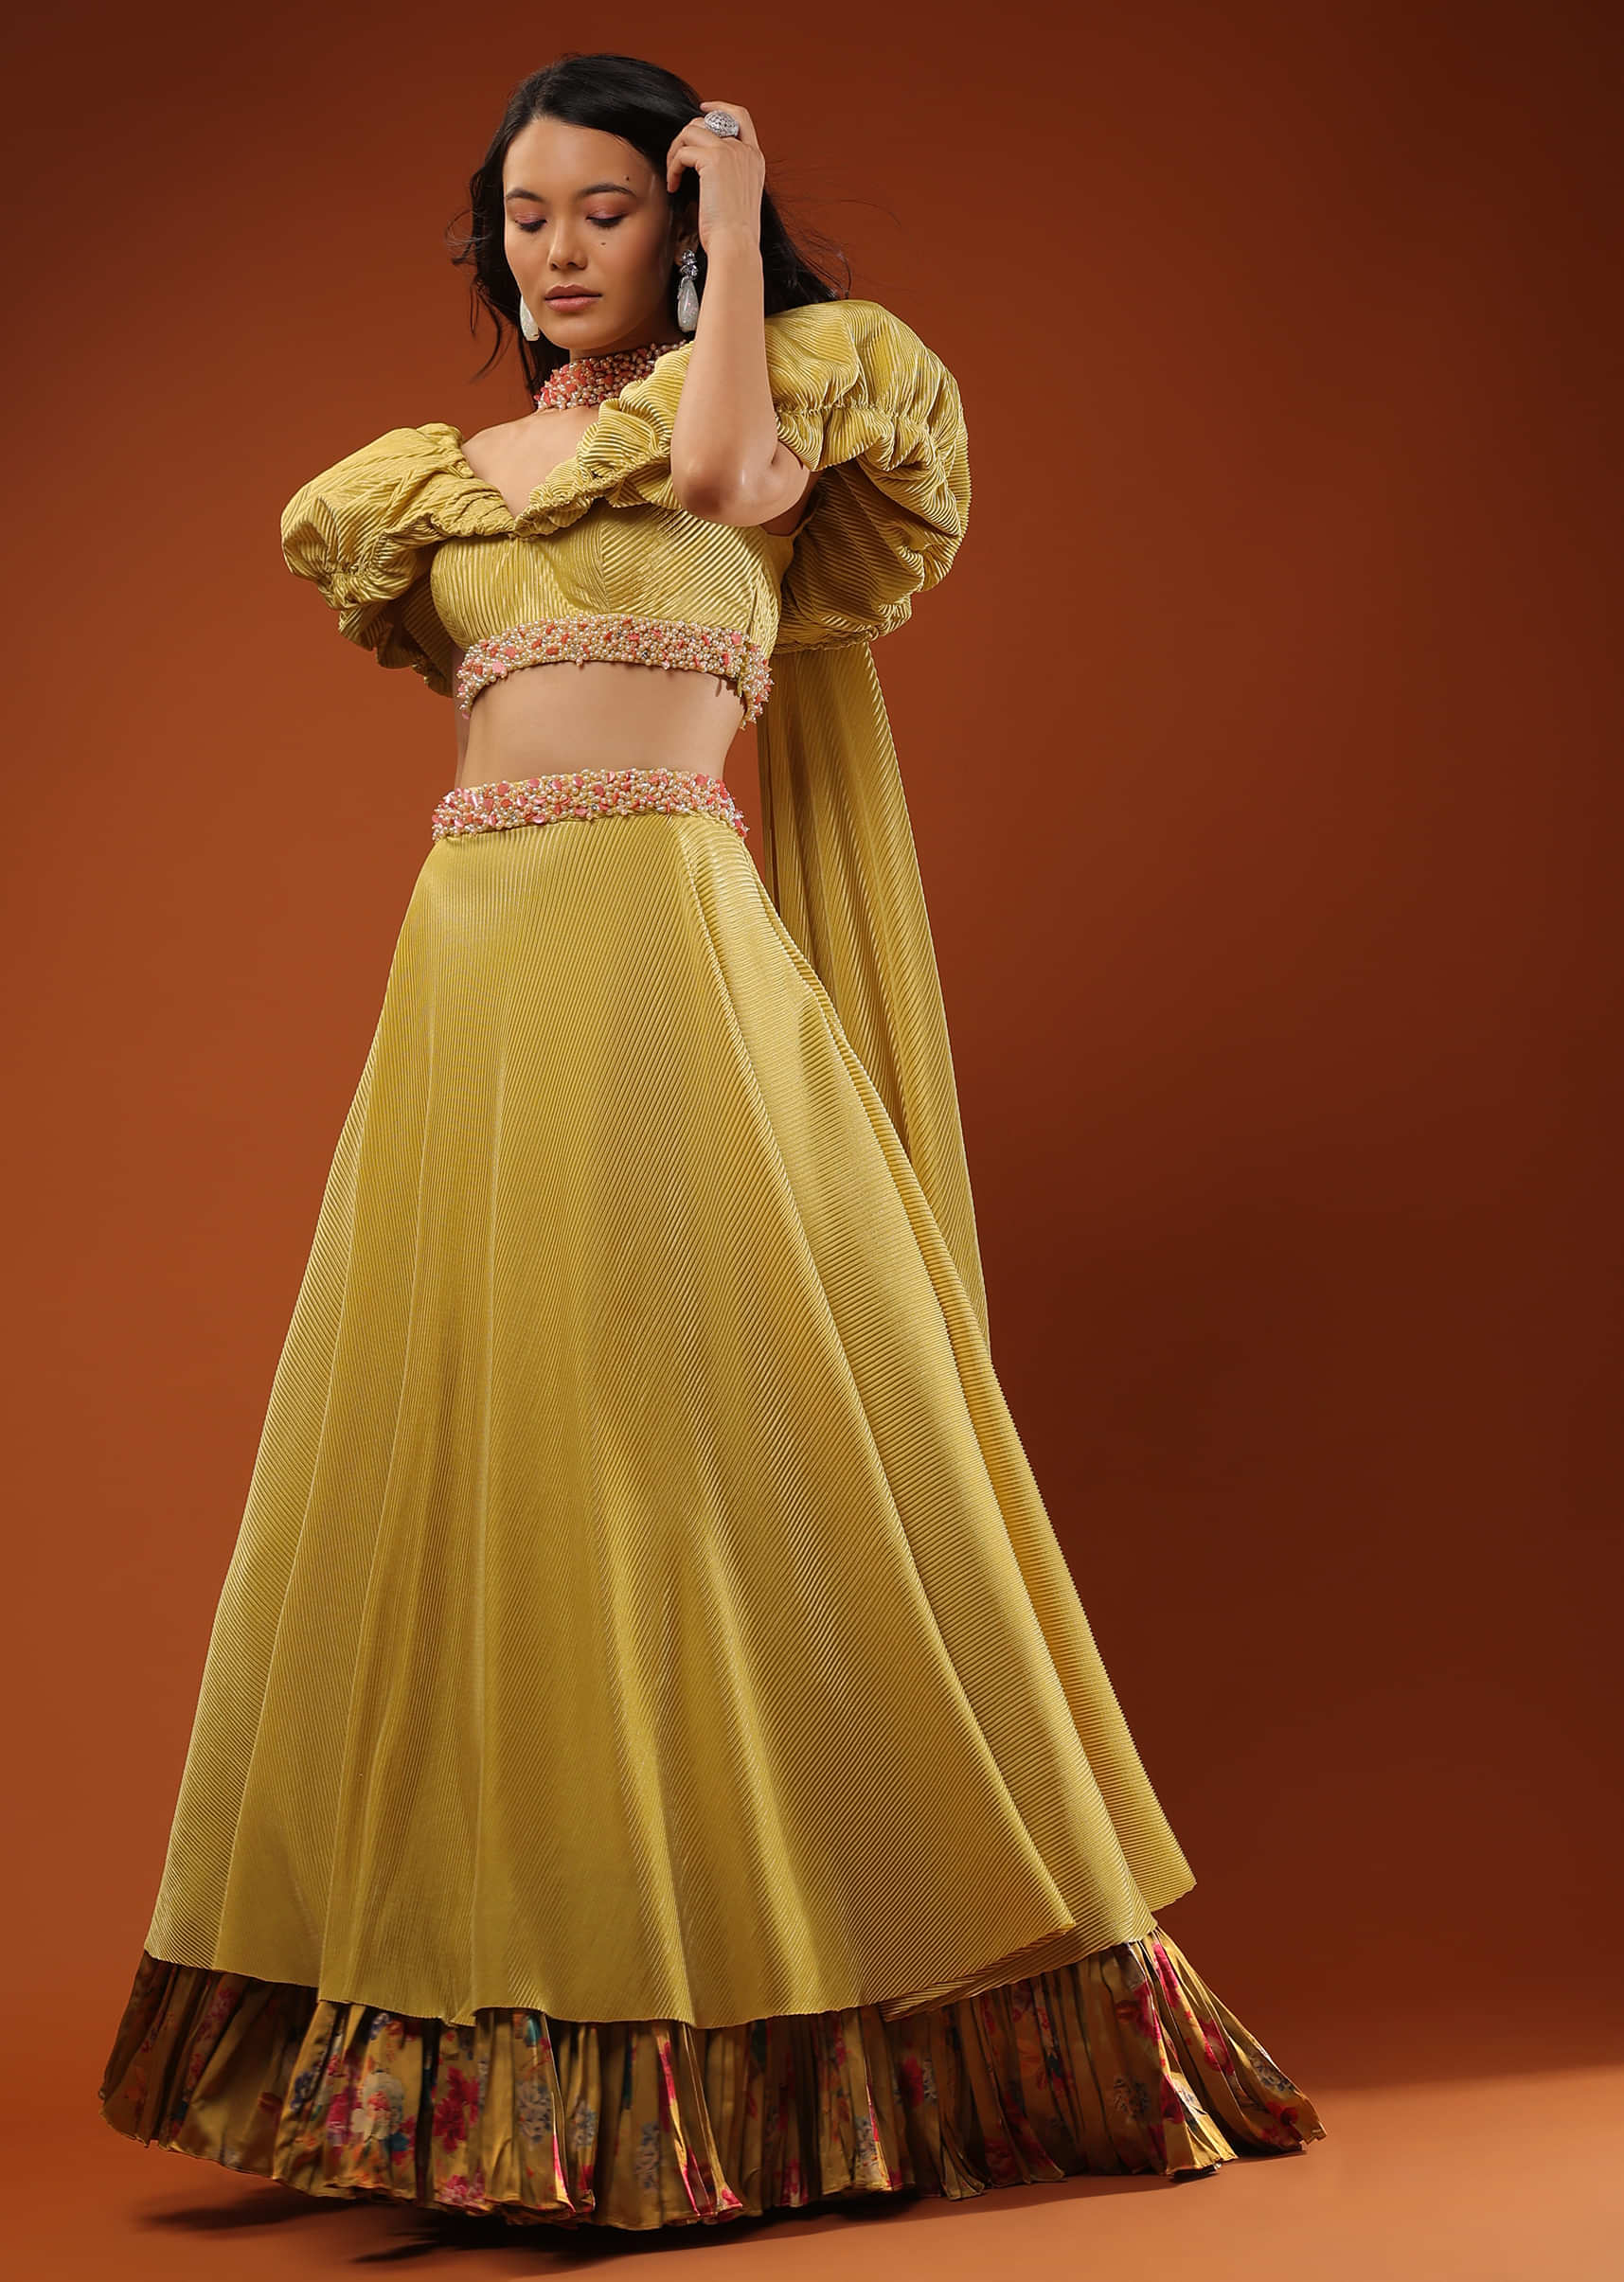 Buy Bollywood Dance Costume Kathak Dress Wedding Dress Online in India -  Etsy